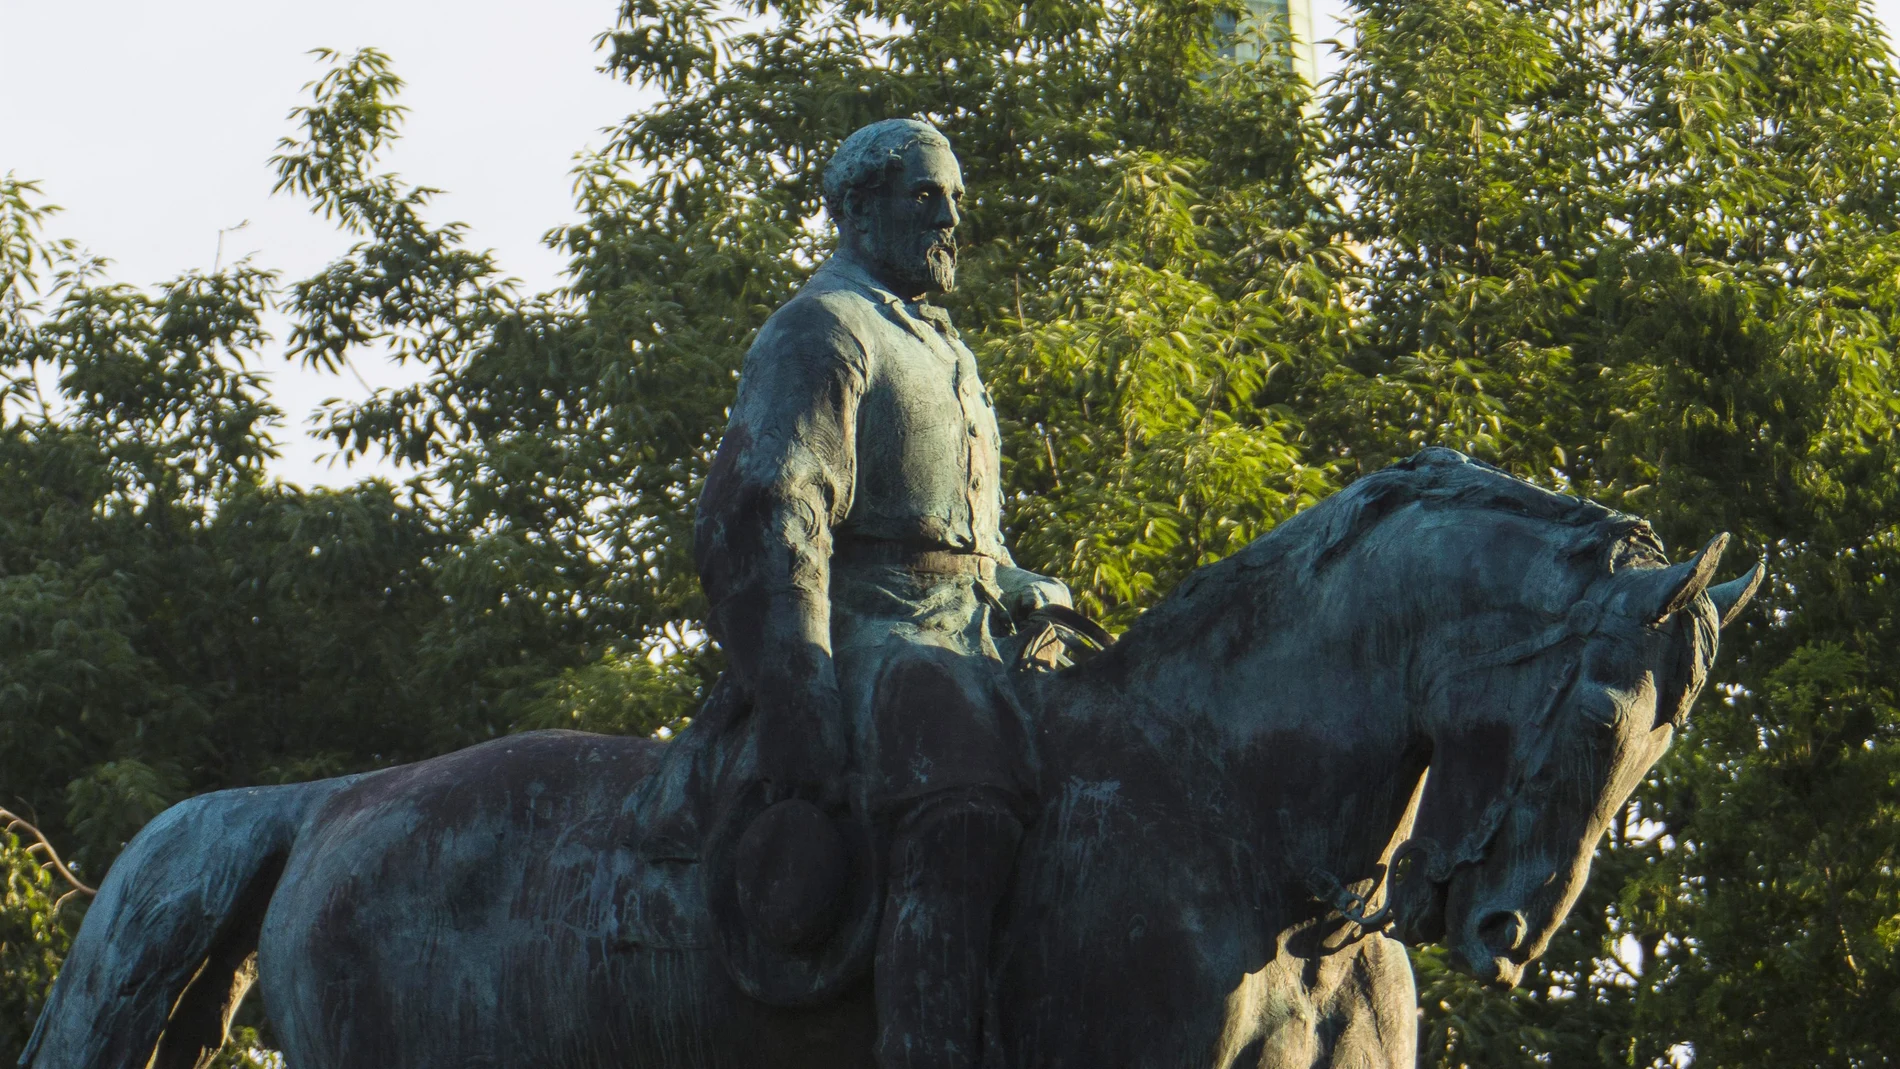 La del General Robert E. Lee que se retiró en julio en Charlottesville